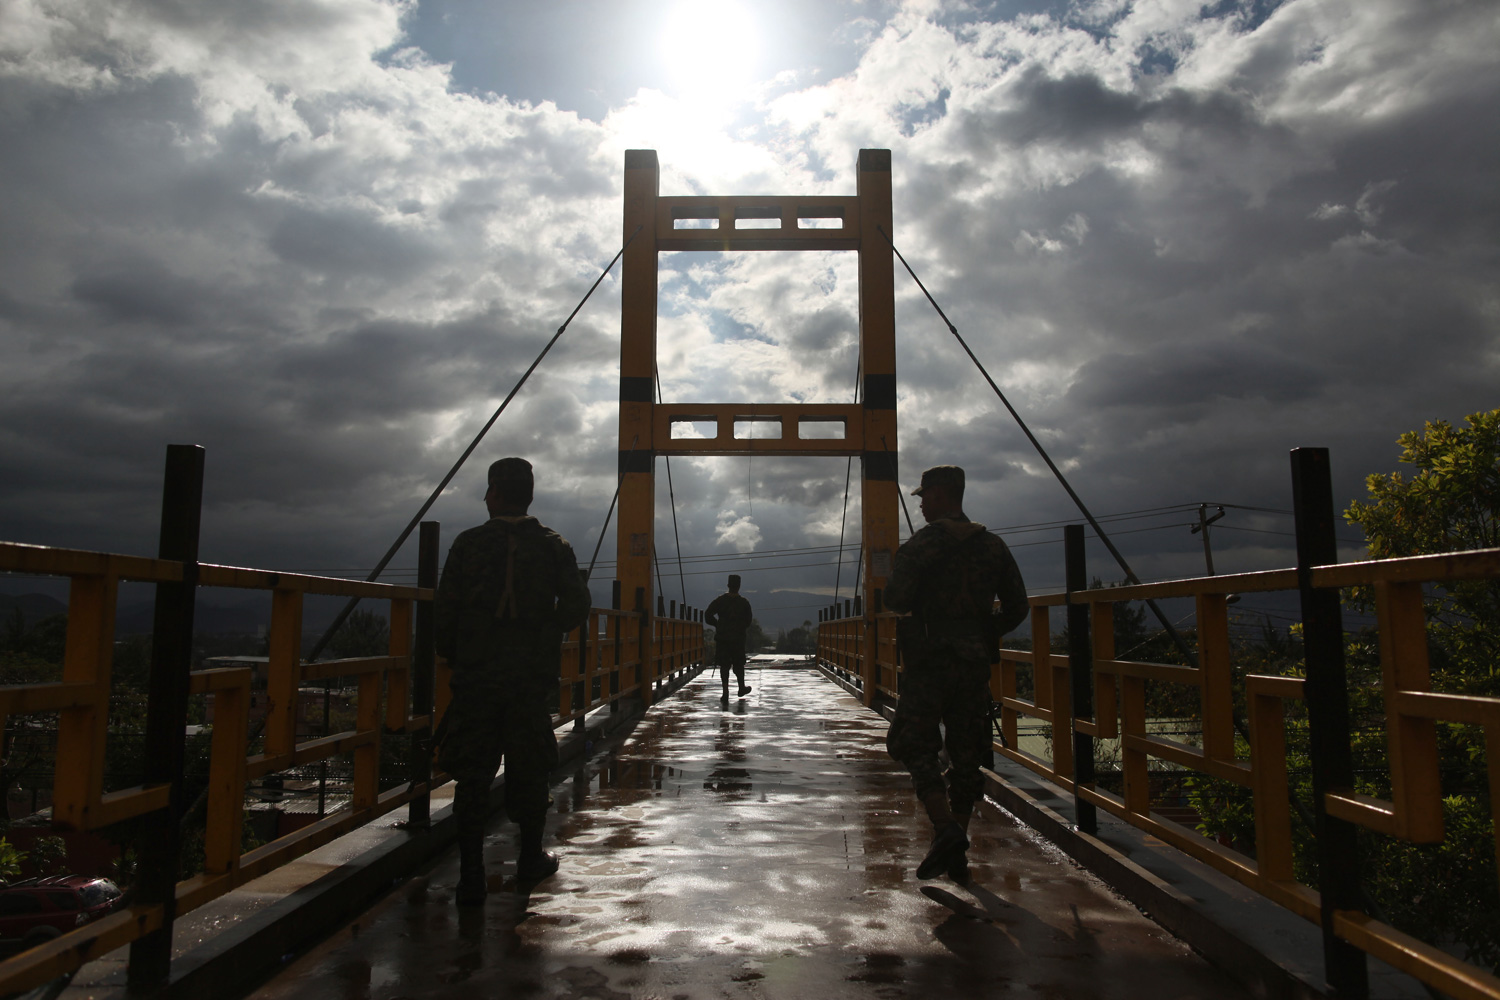 March 5, 2012. Soldiers stand guard on a pedestrian bridge in Tegucigalpa, Honduras.